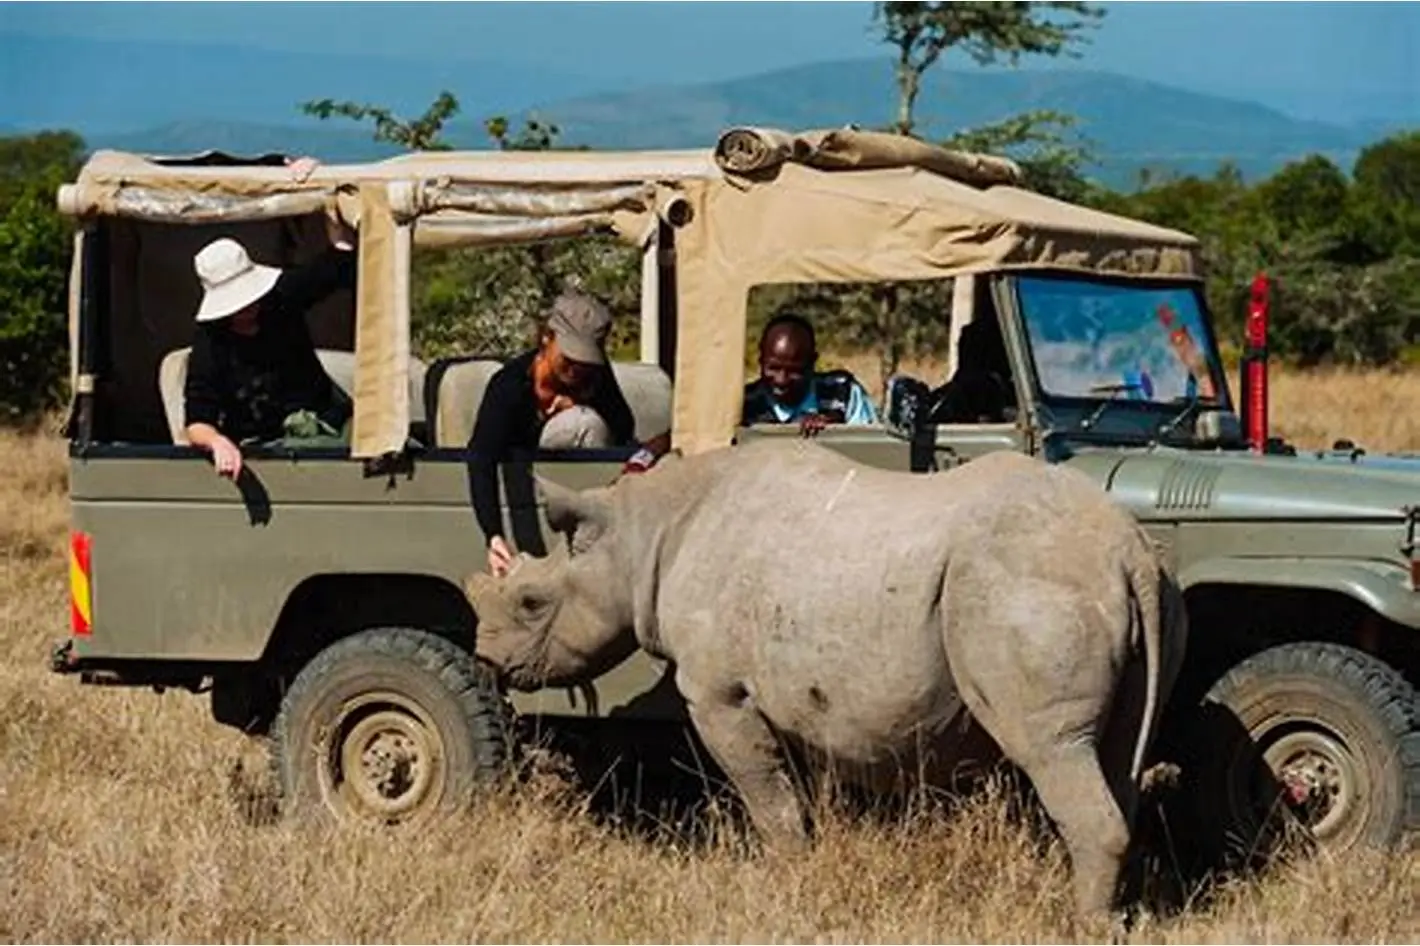 Big Five, safari animals, Kenya. Ol Pejeta is a haven for Kenya animals.